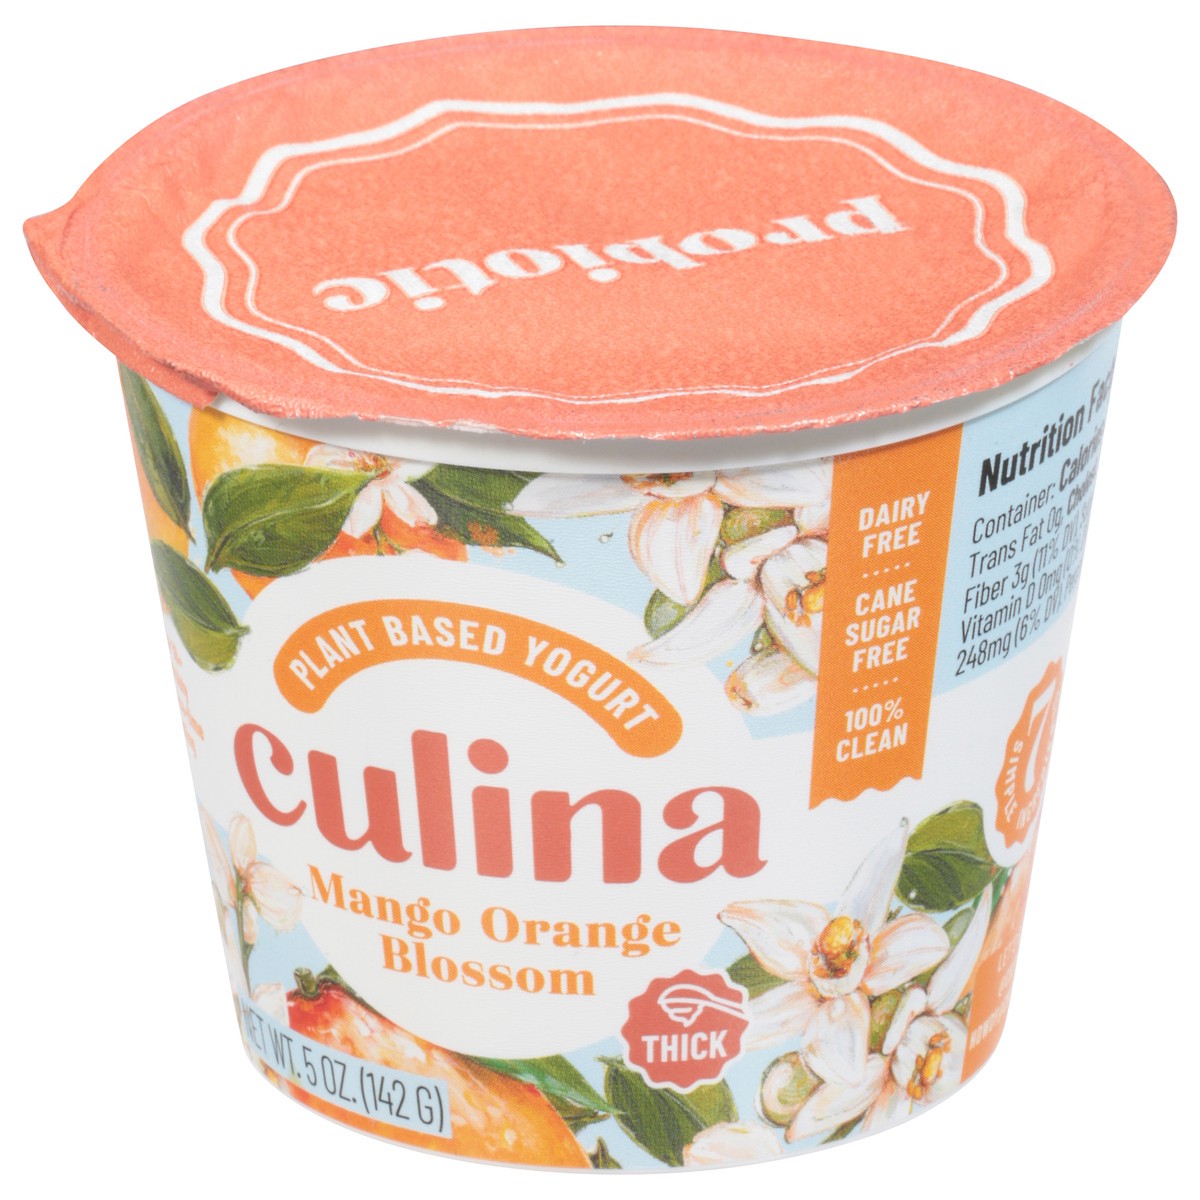 slide 3 of 11, Culina Thick Mango Orange Blossom Plant Based Yogurt 5 oz, 5 oz